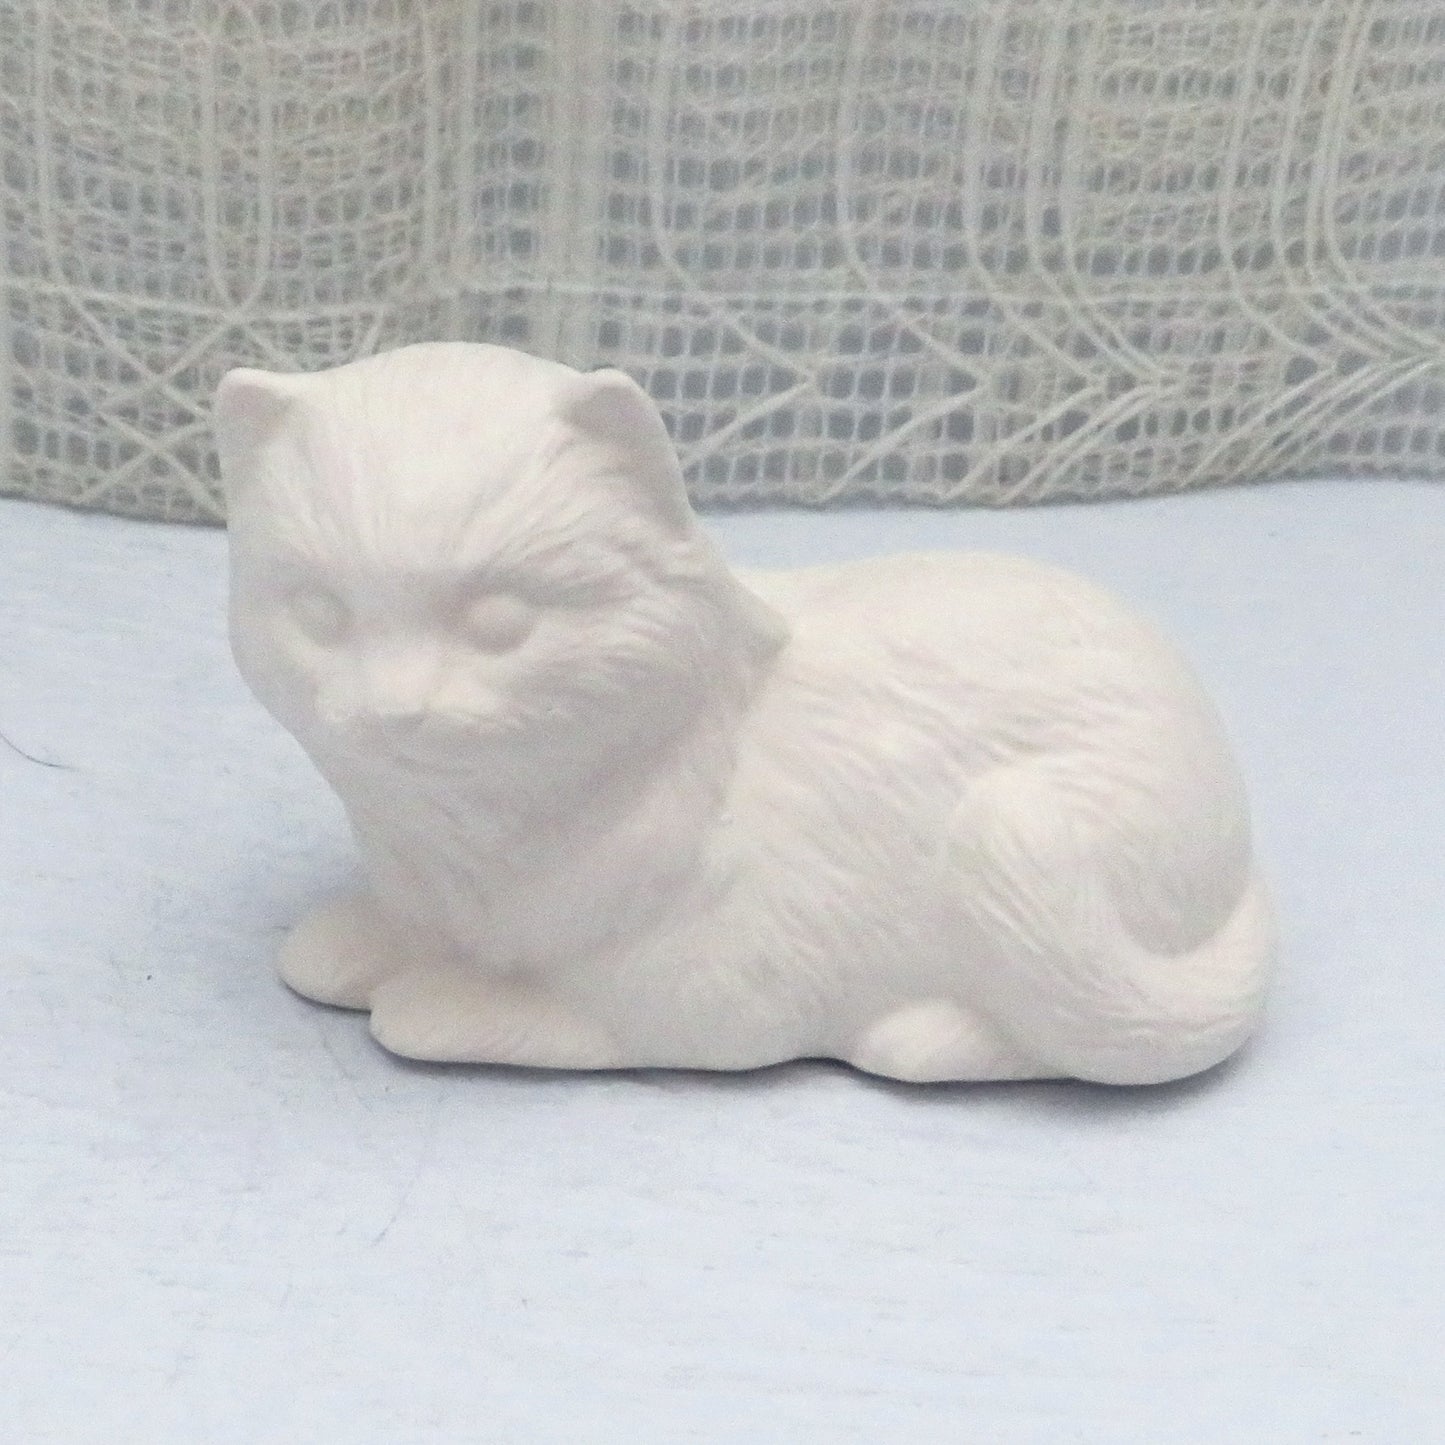 Handmade Ready to Paint Ceramic Cat Figurine / Cat Statue / Ceramics to Paint / Bisque Ware / Ceramic Bisque / Paintable Ceramics /Cat Gift